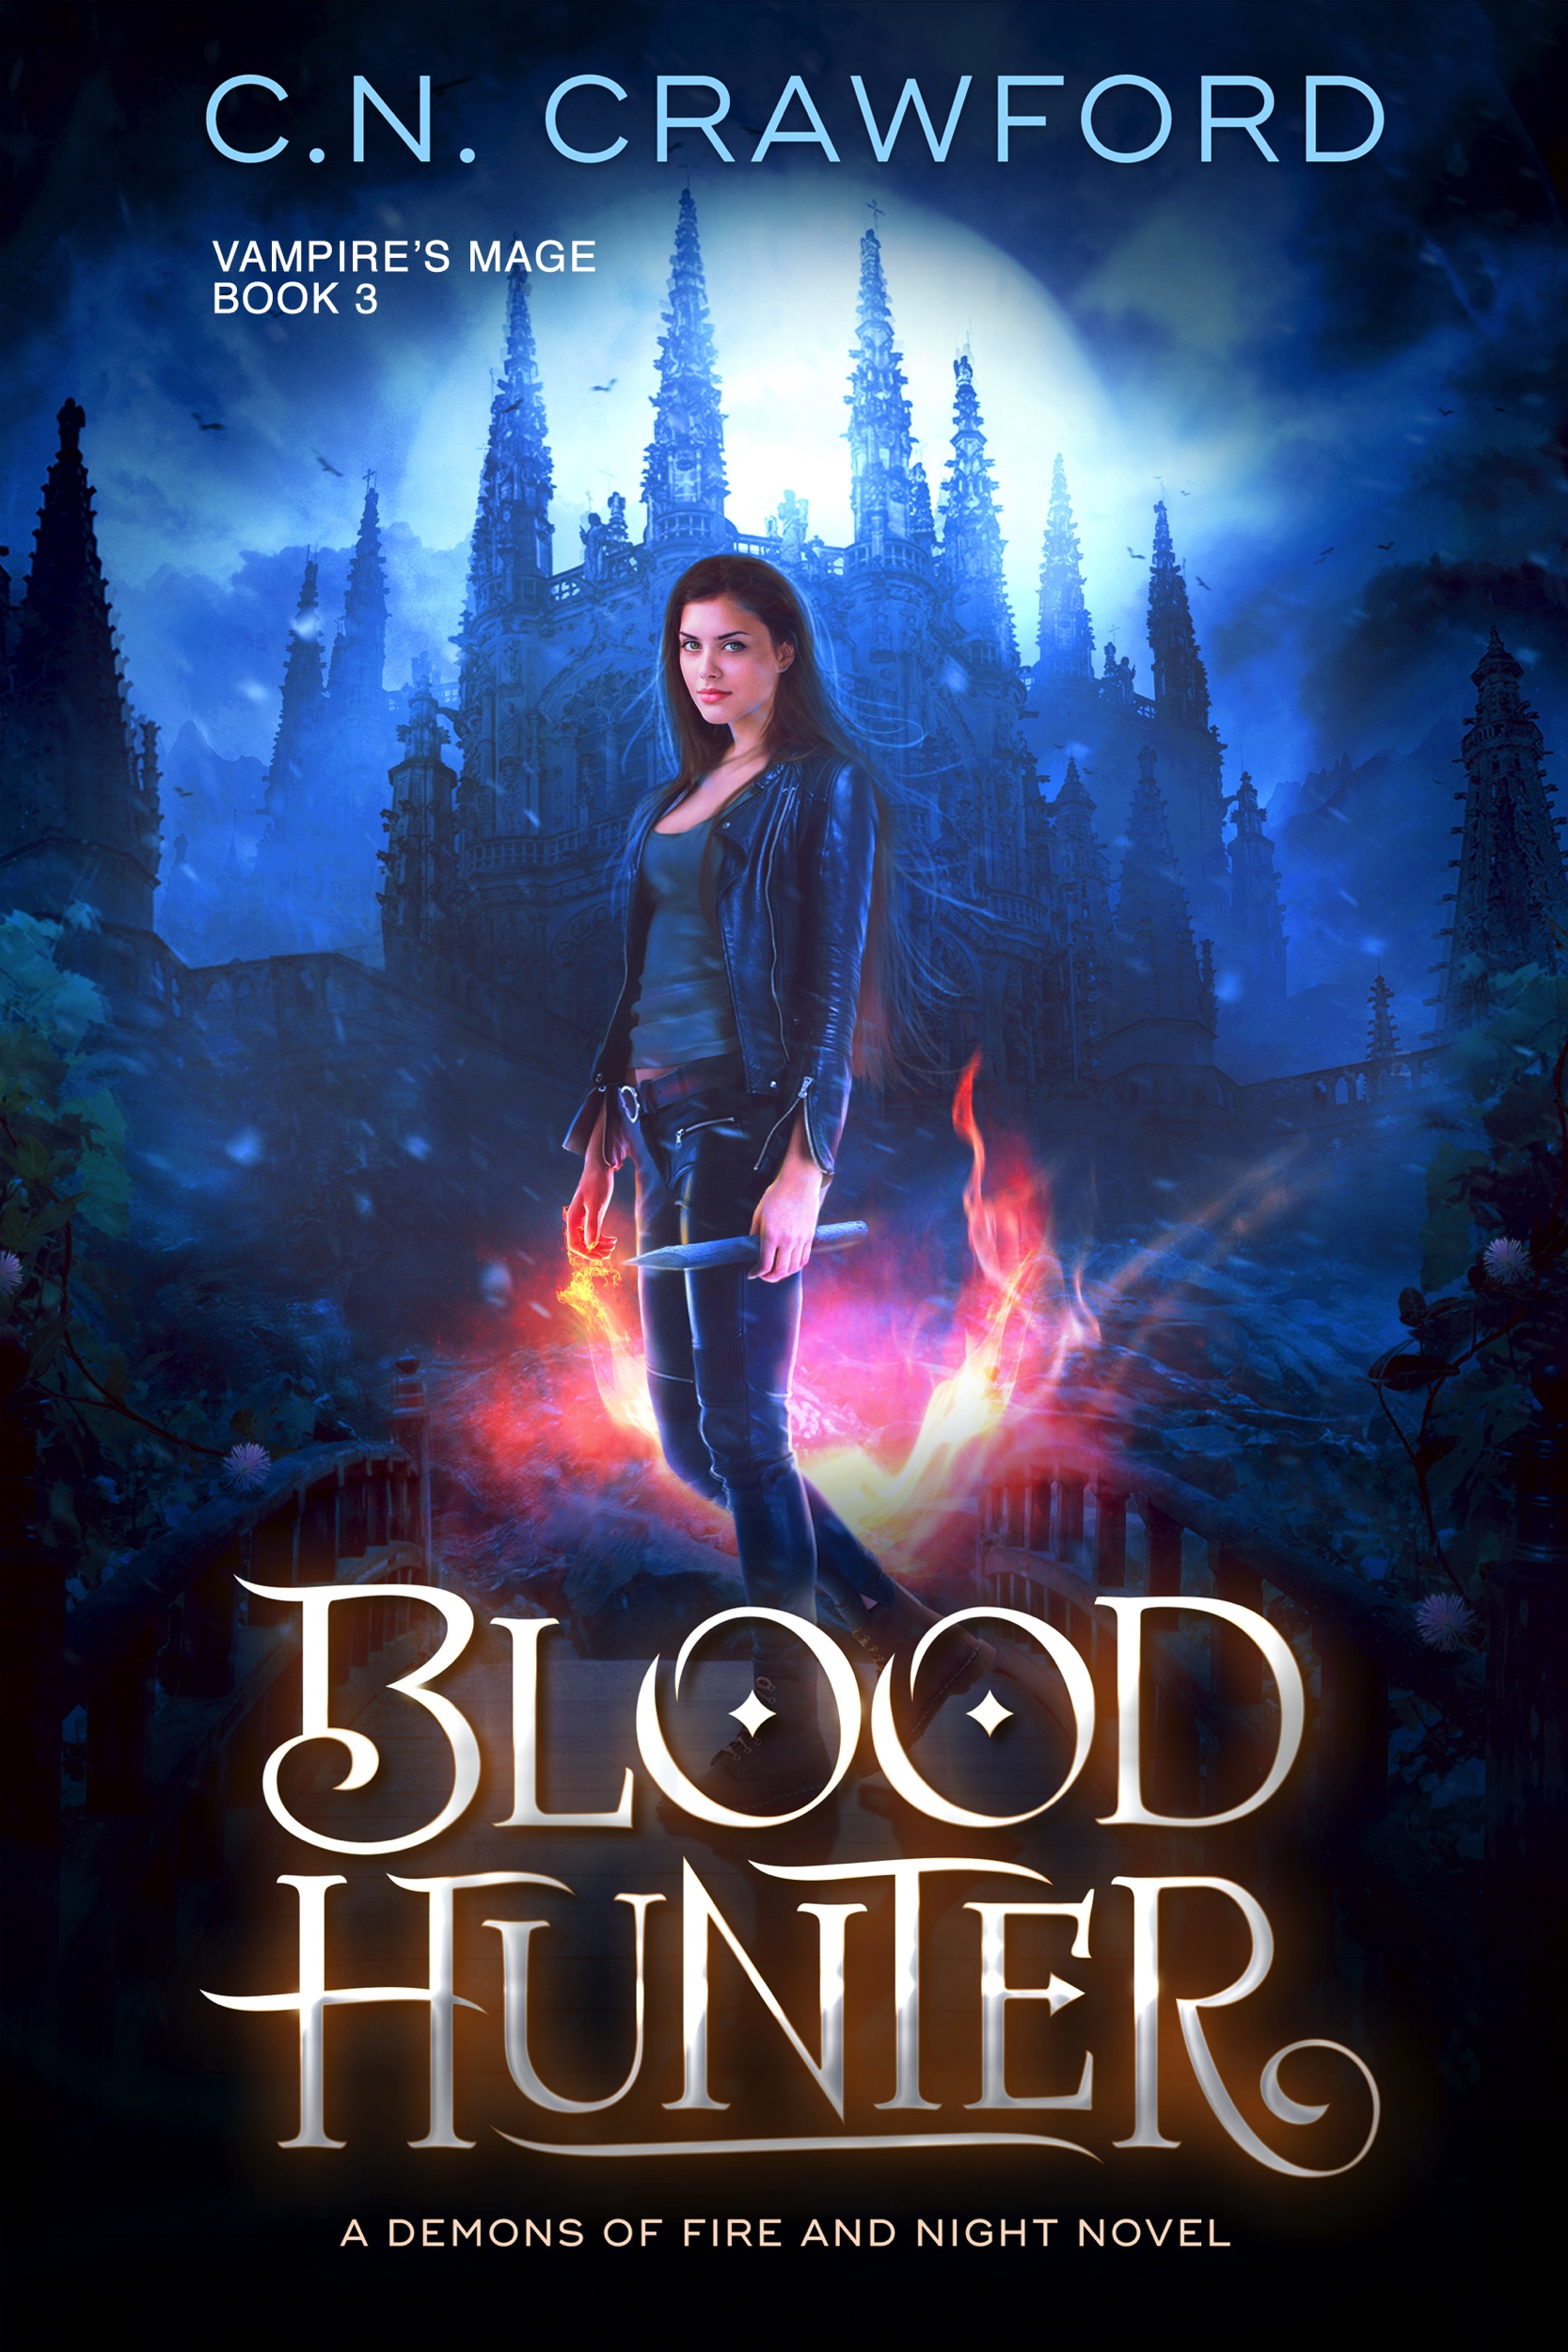 Book 3: Blood Hunter